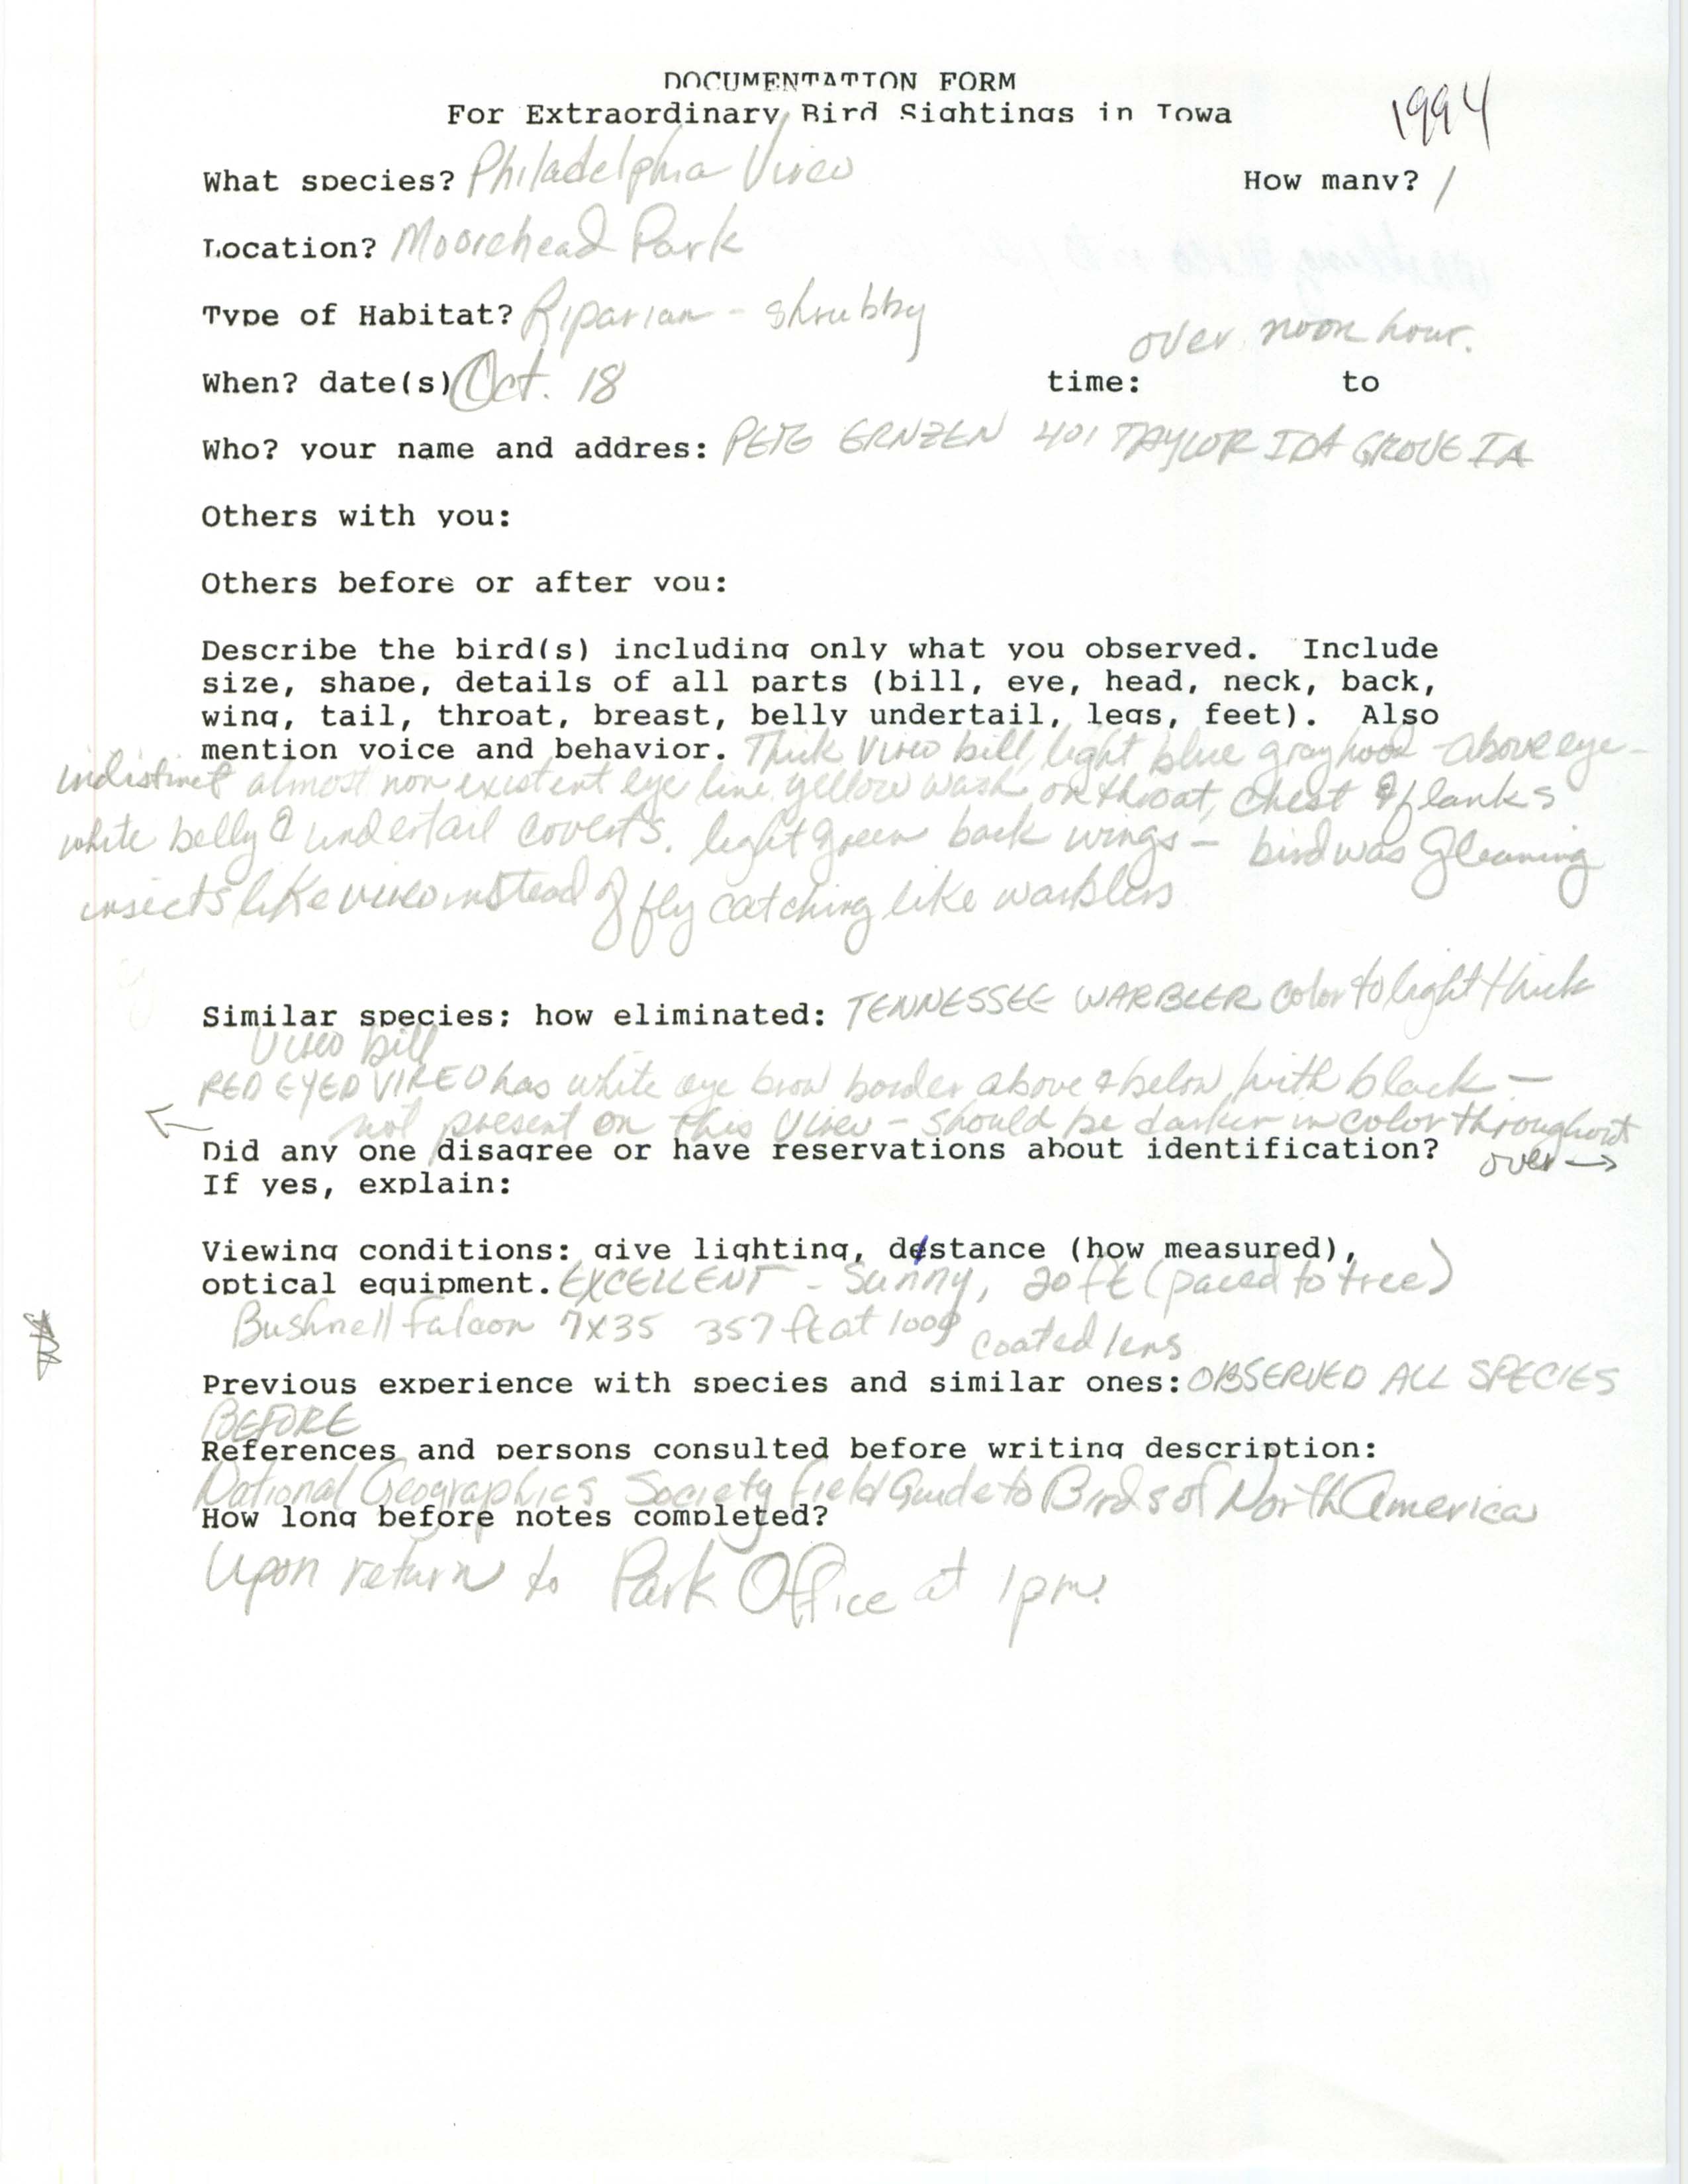 Rare bird documentation form for Philadelphia Vireo at Moorehead Park in Ida County, 1994